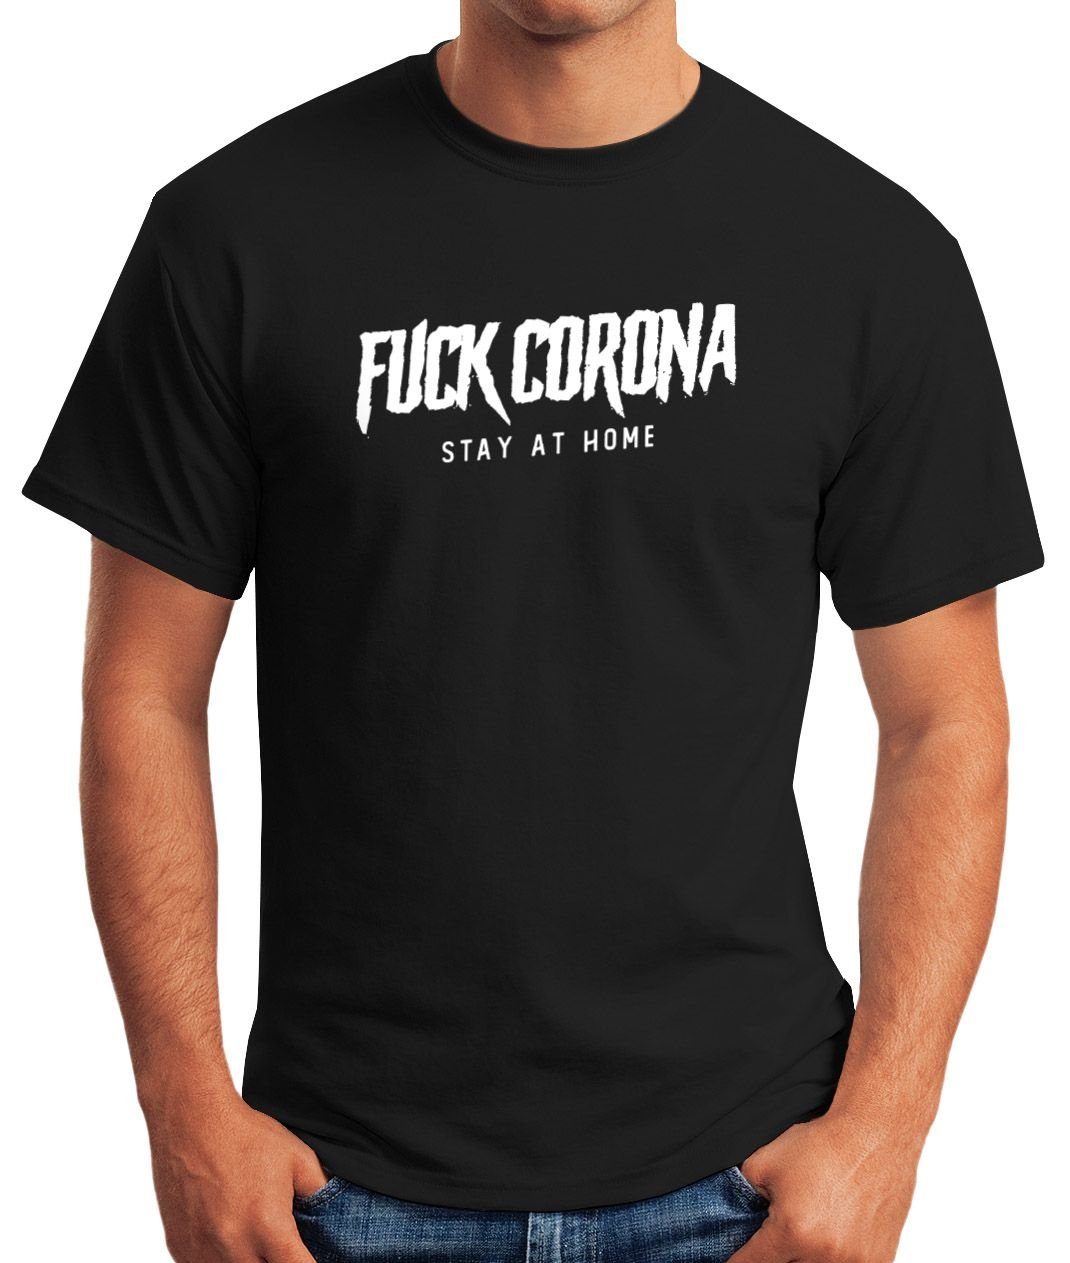 Print-Shirt T-Shirt MoonWorks Botschaft mit stay Aufruf the Corona Appell Herren Moonworks® at Print Flatten Fuck home Statement curve